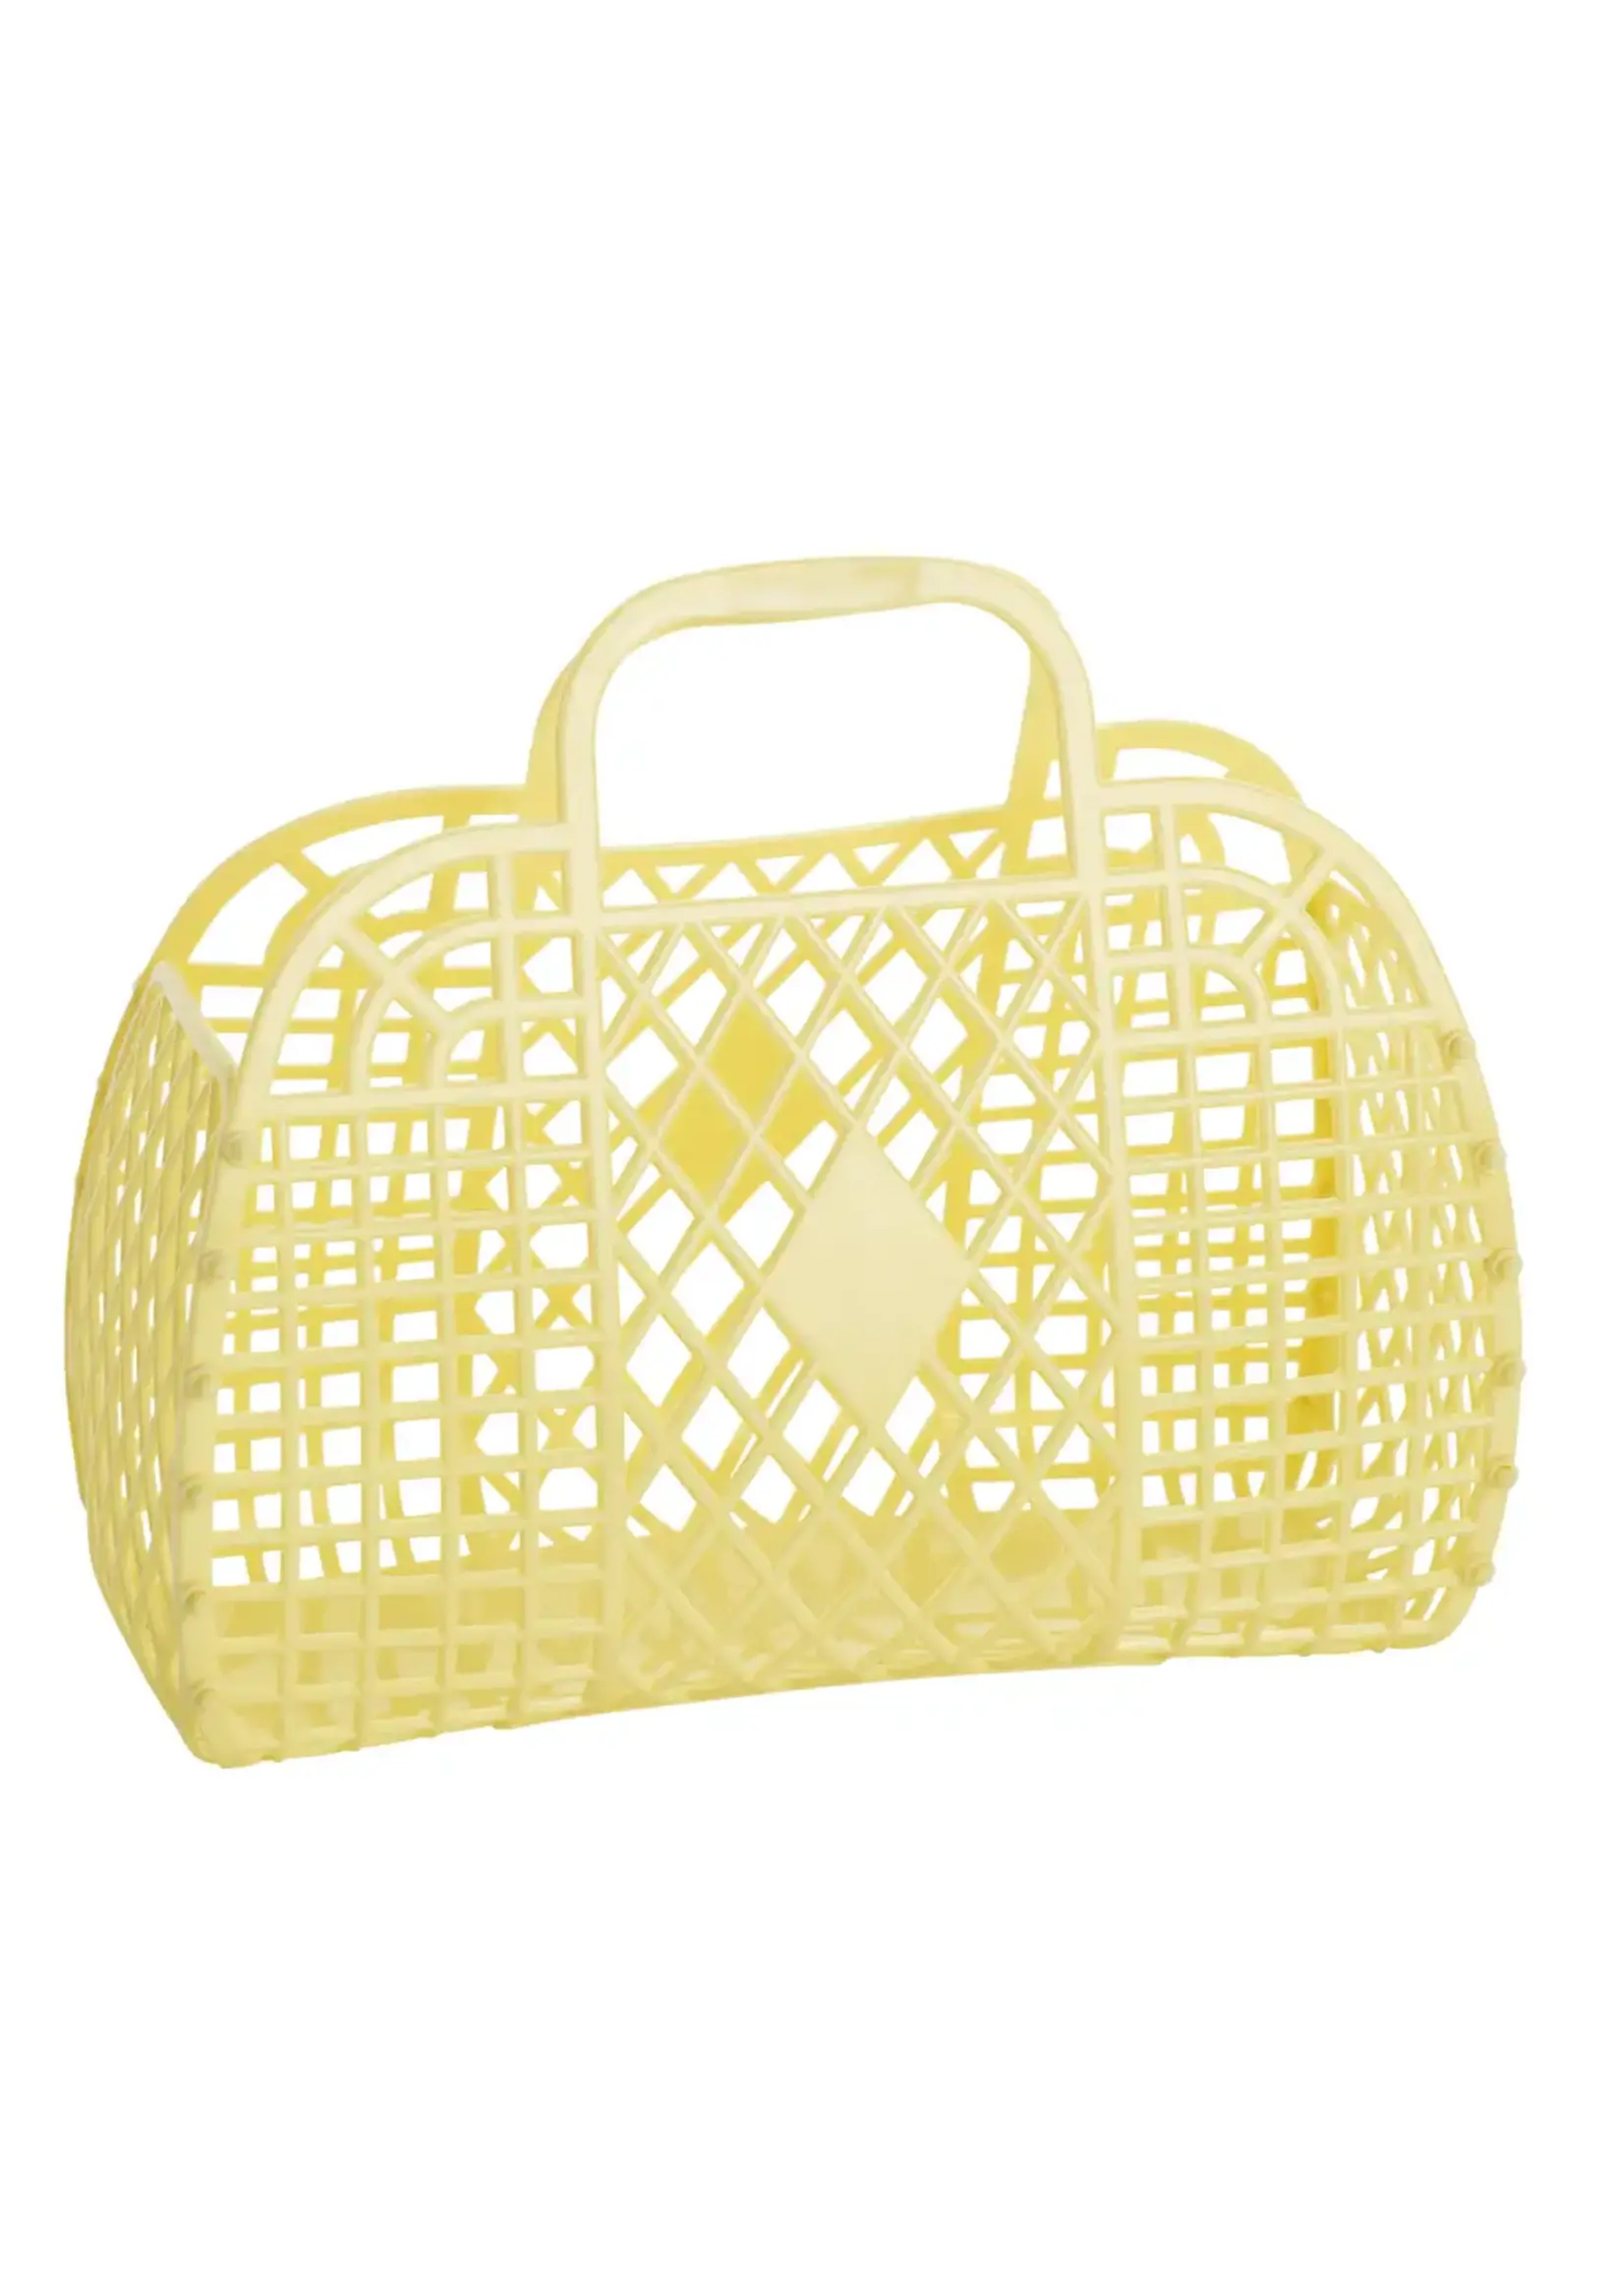 Sun Jellies Retro Basket in Small Yellow